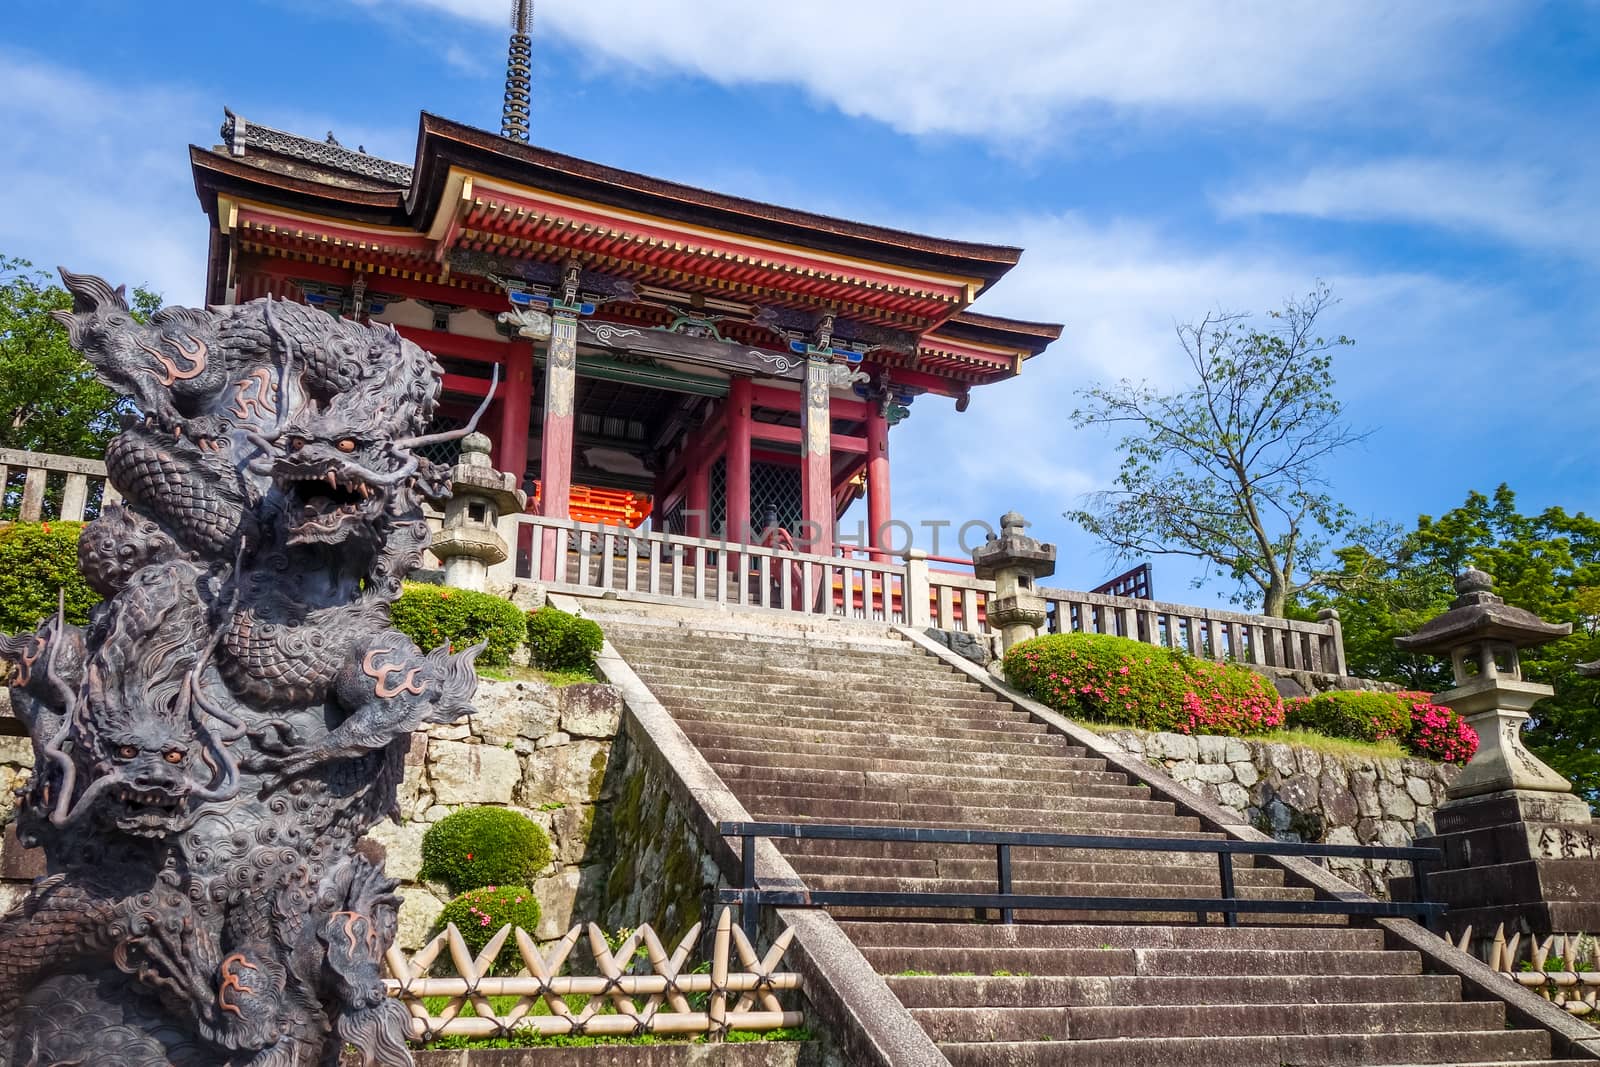 Dragon statue in front of the kiyomizu-dera temple gate, Kyoto, Japan